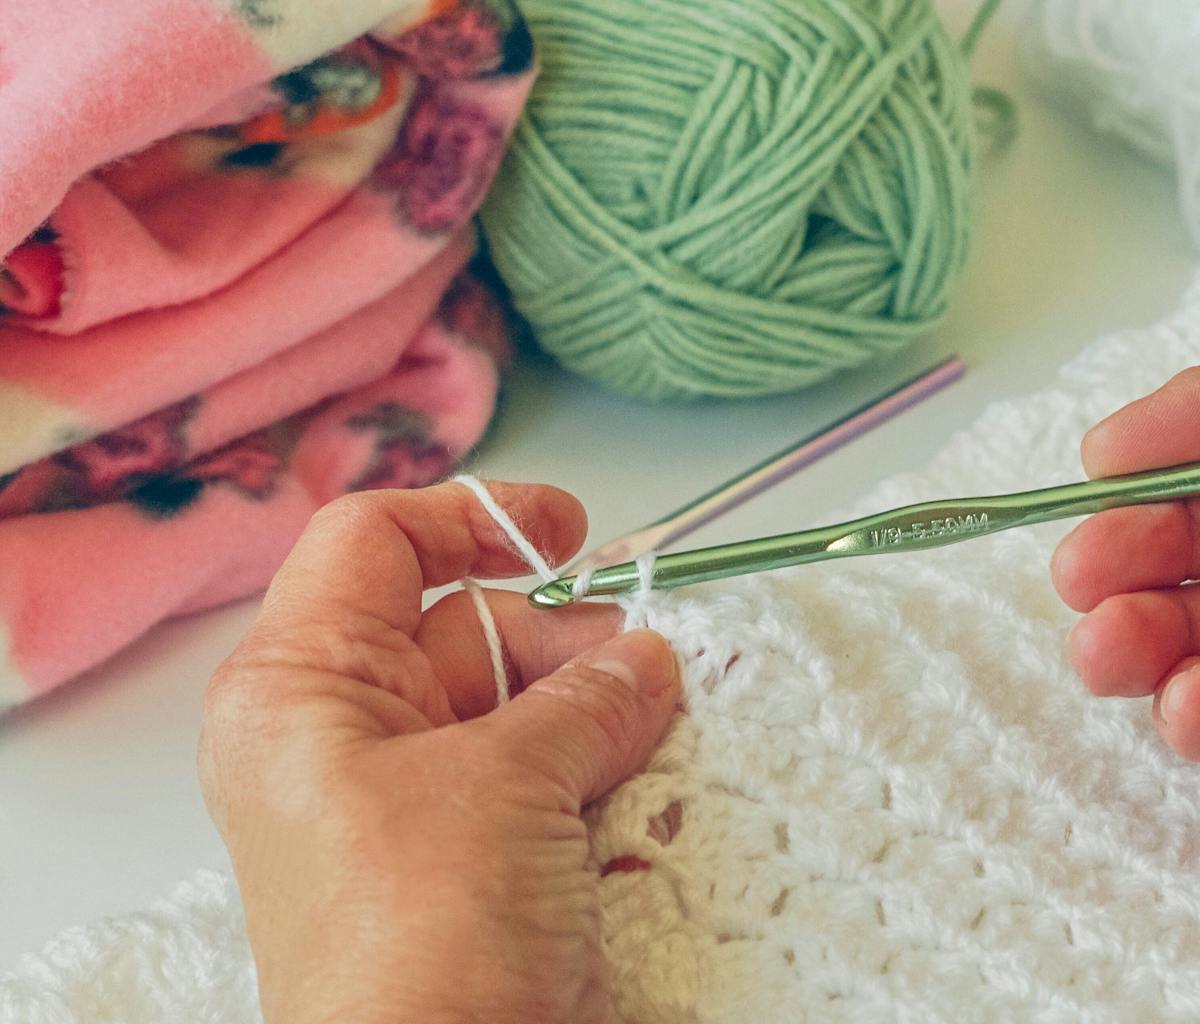 Ergonomic Handle Crochet Hooks Knitting Crocheting Needles Blanket Shawl  Yarn Hand Weave Tool Sewing Accessories for